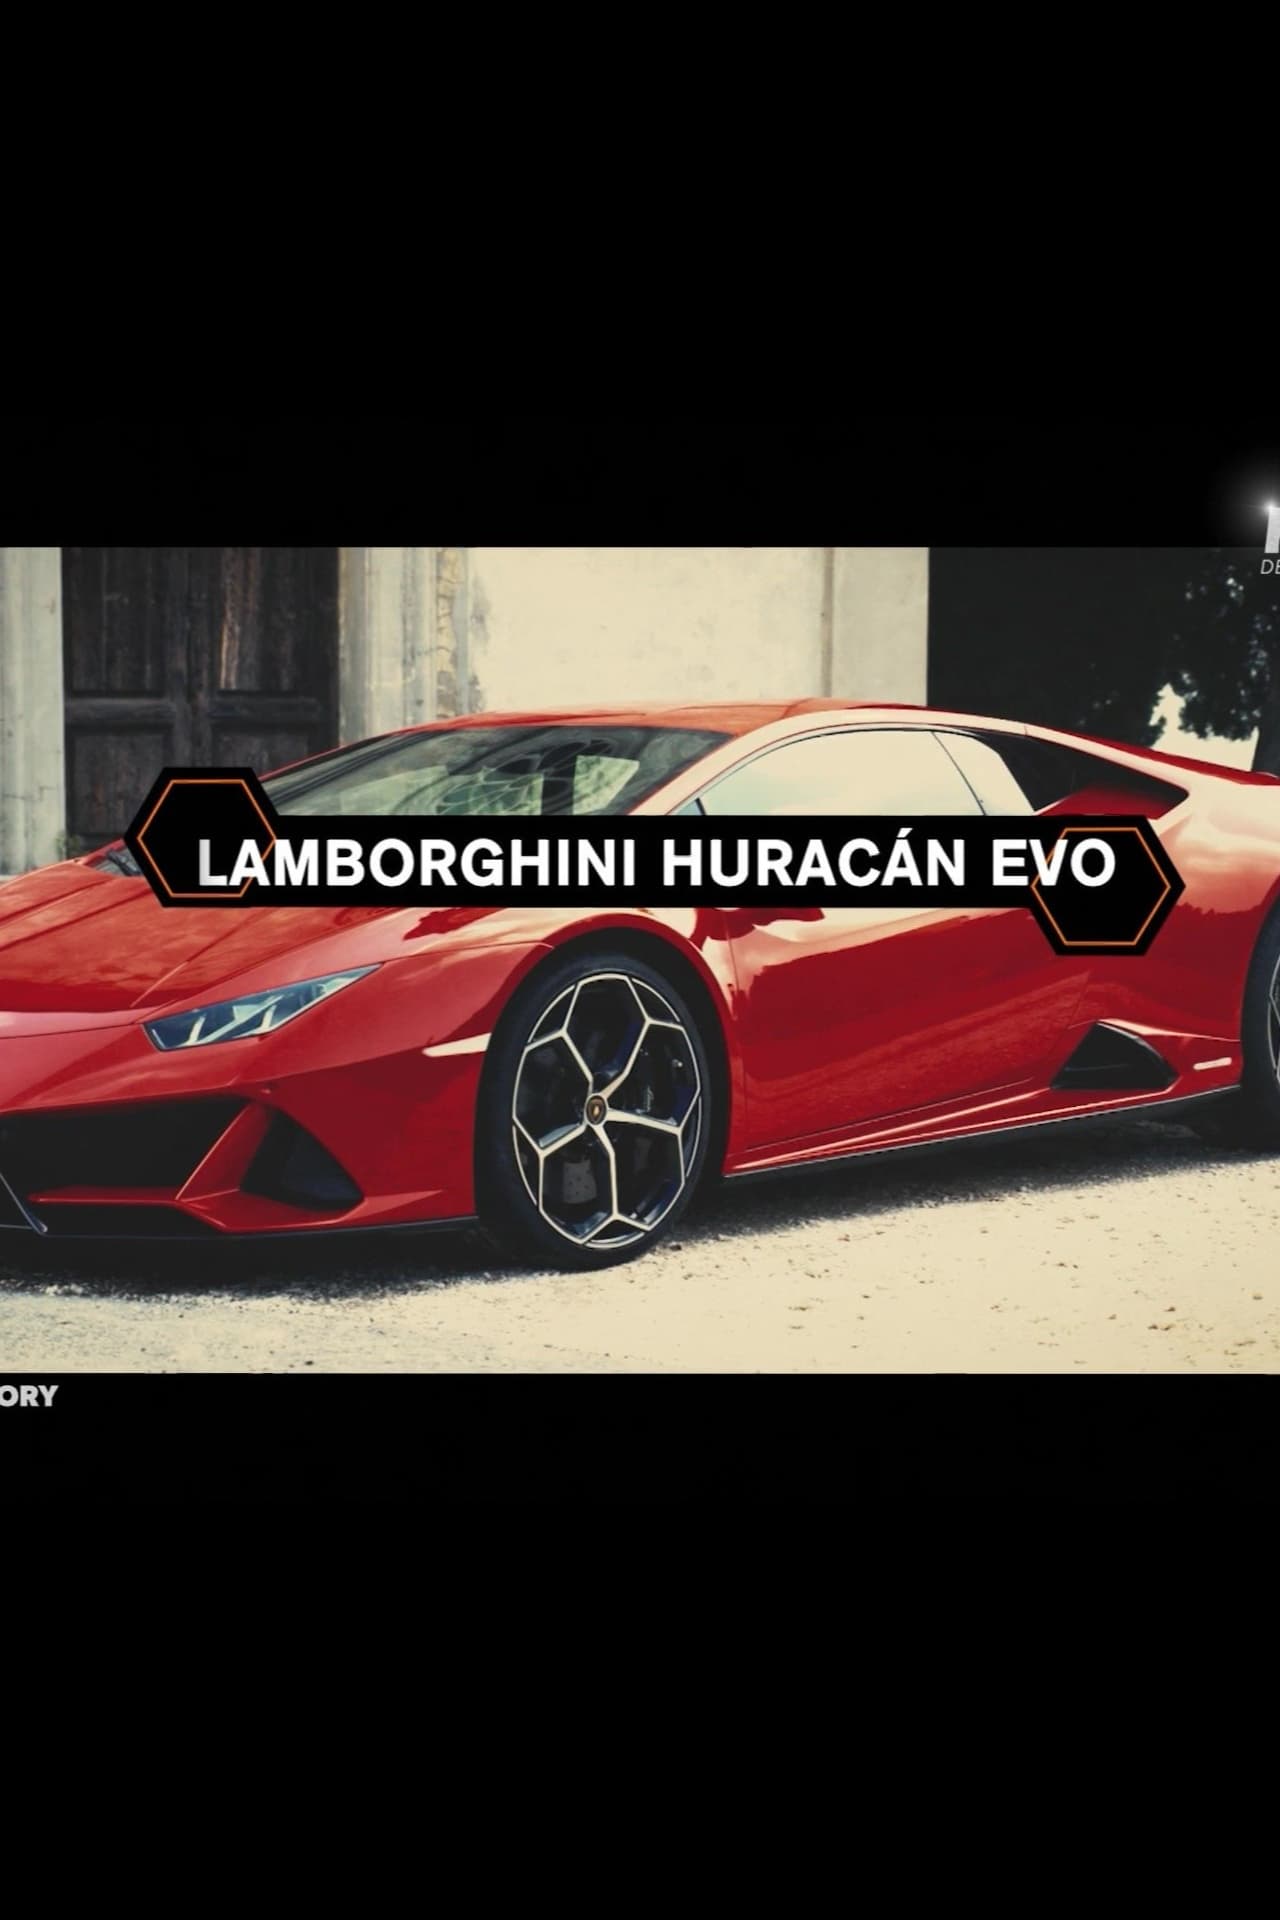 Lamborghini Huracán EVO - Inside the Factory